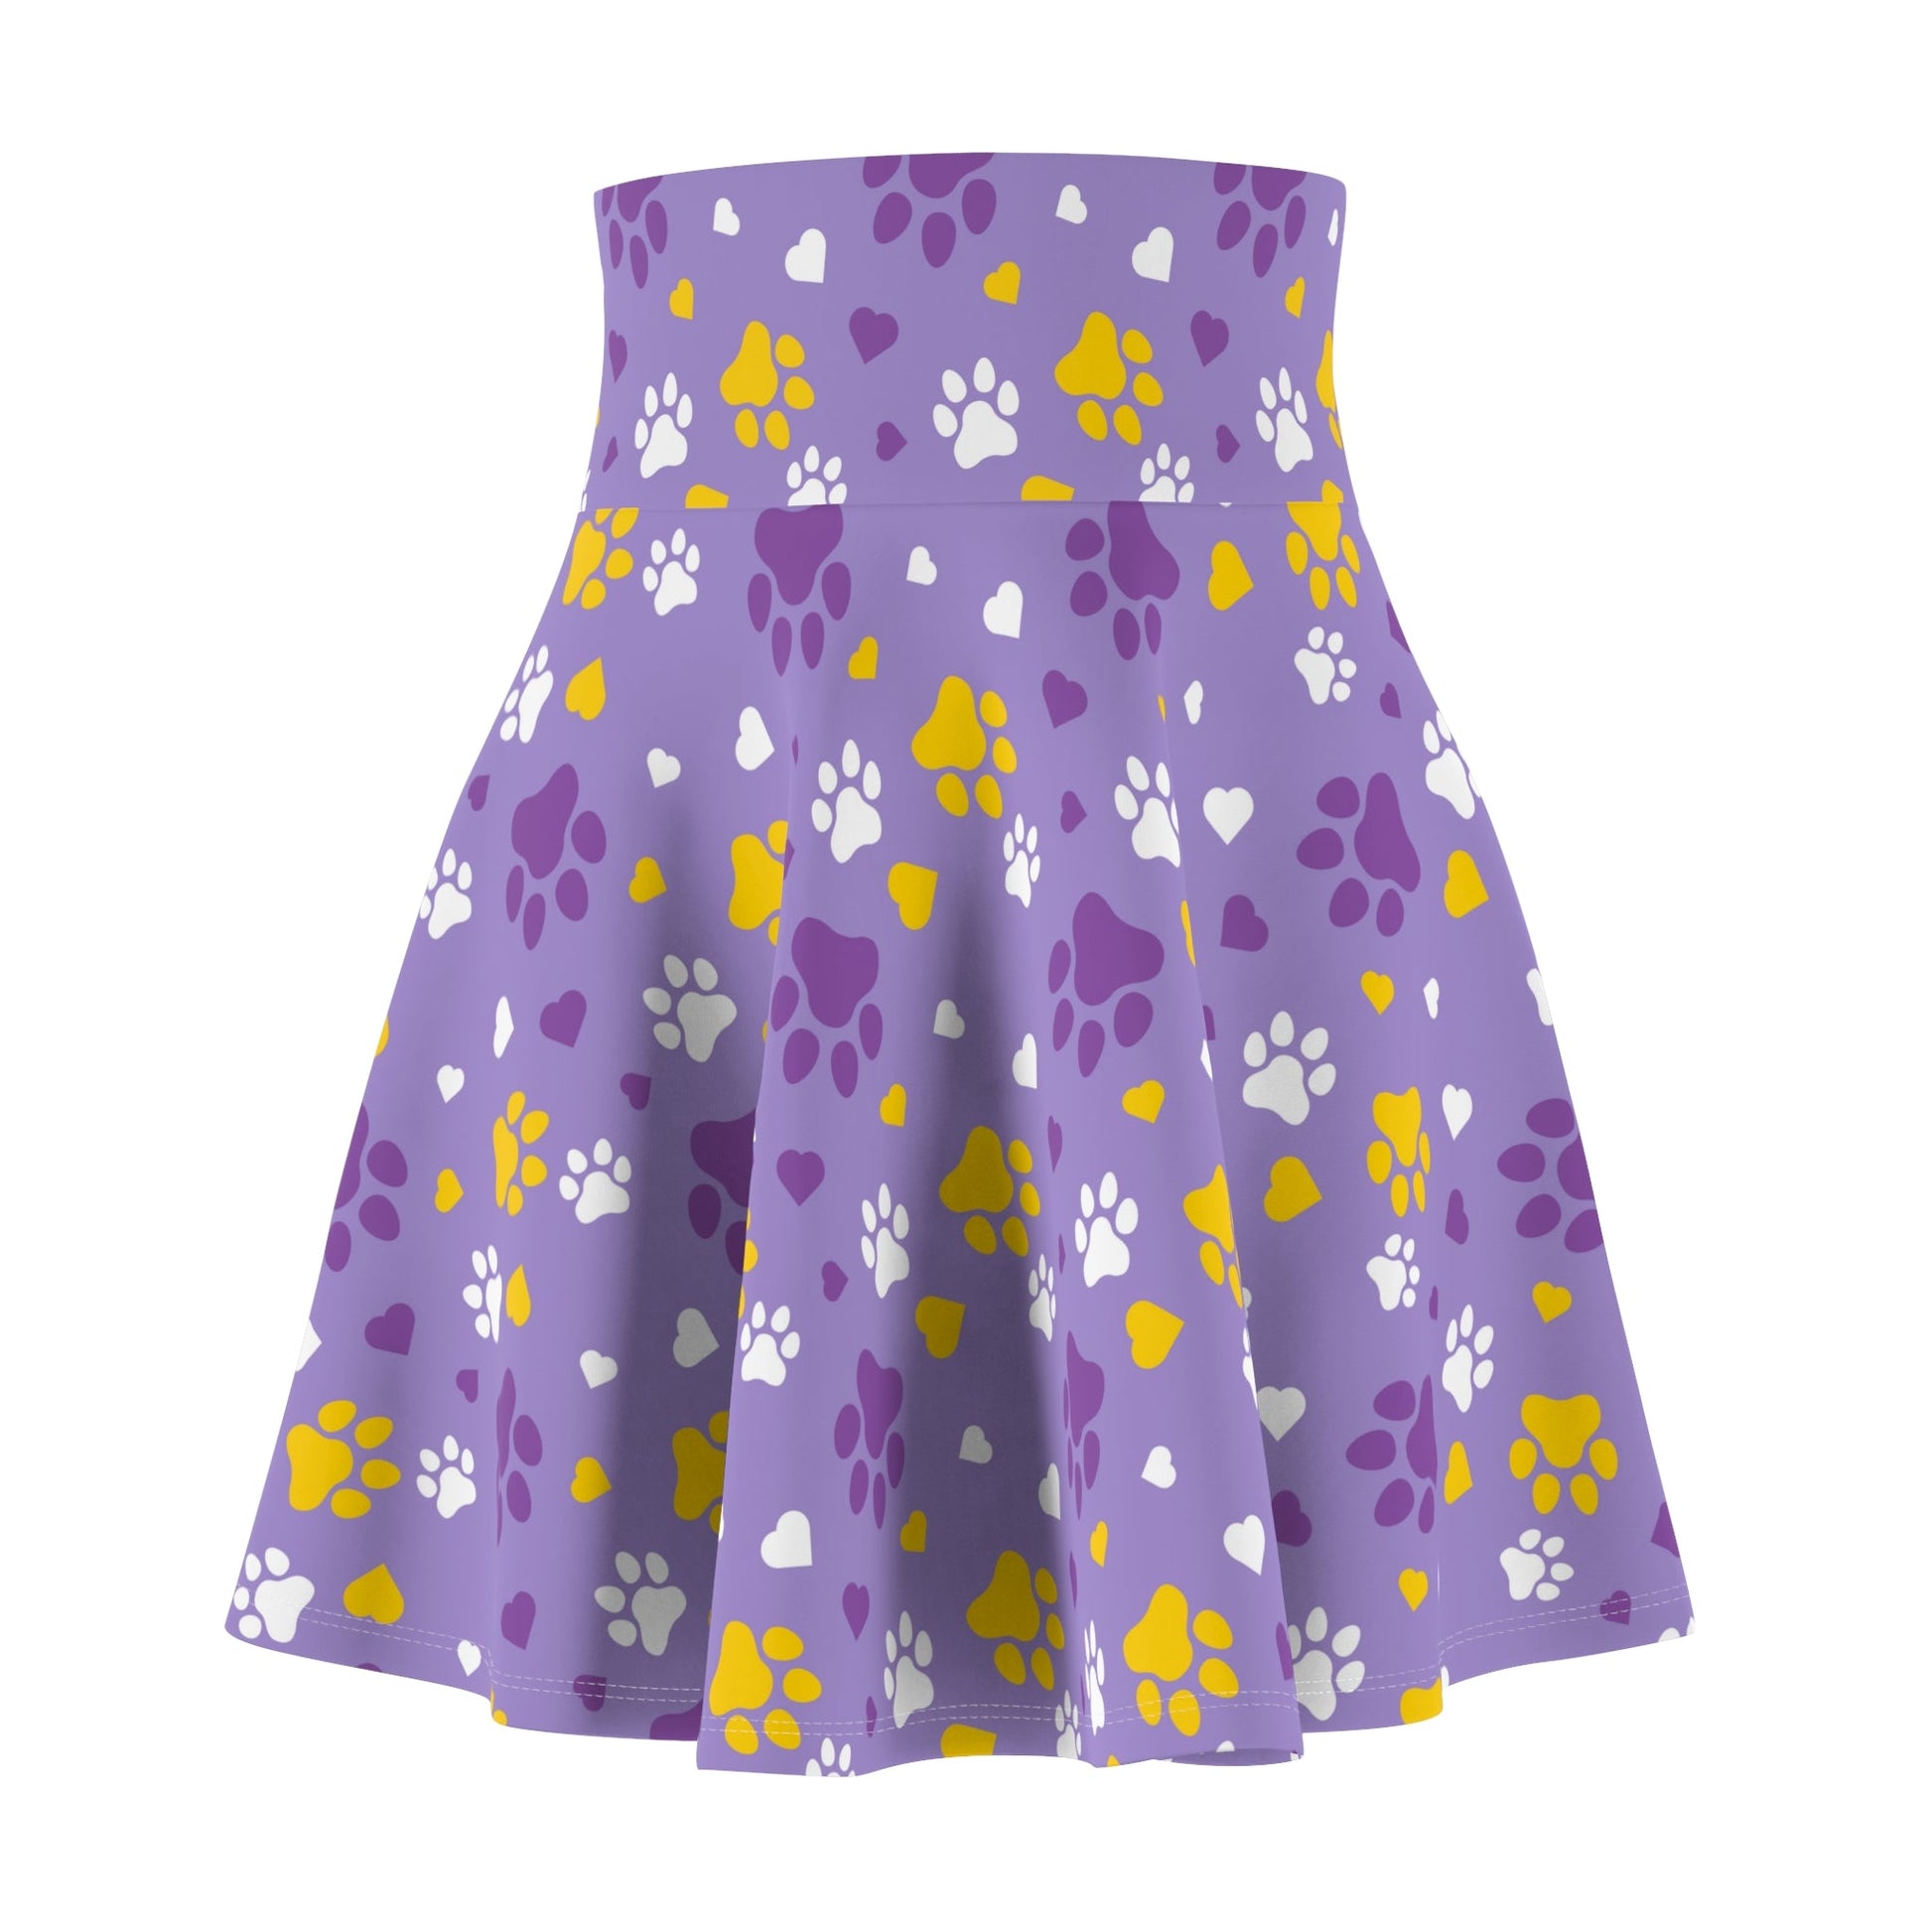 Gold Paws on Purple Women's Skater Skirt - All Over Prints - Epileptic Al’s Shop